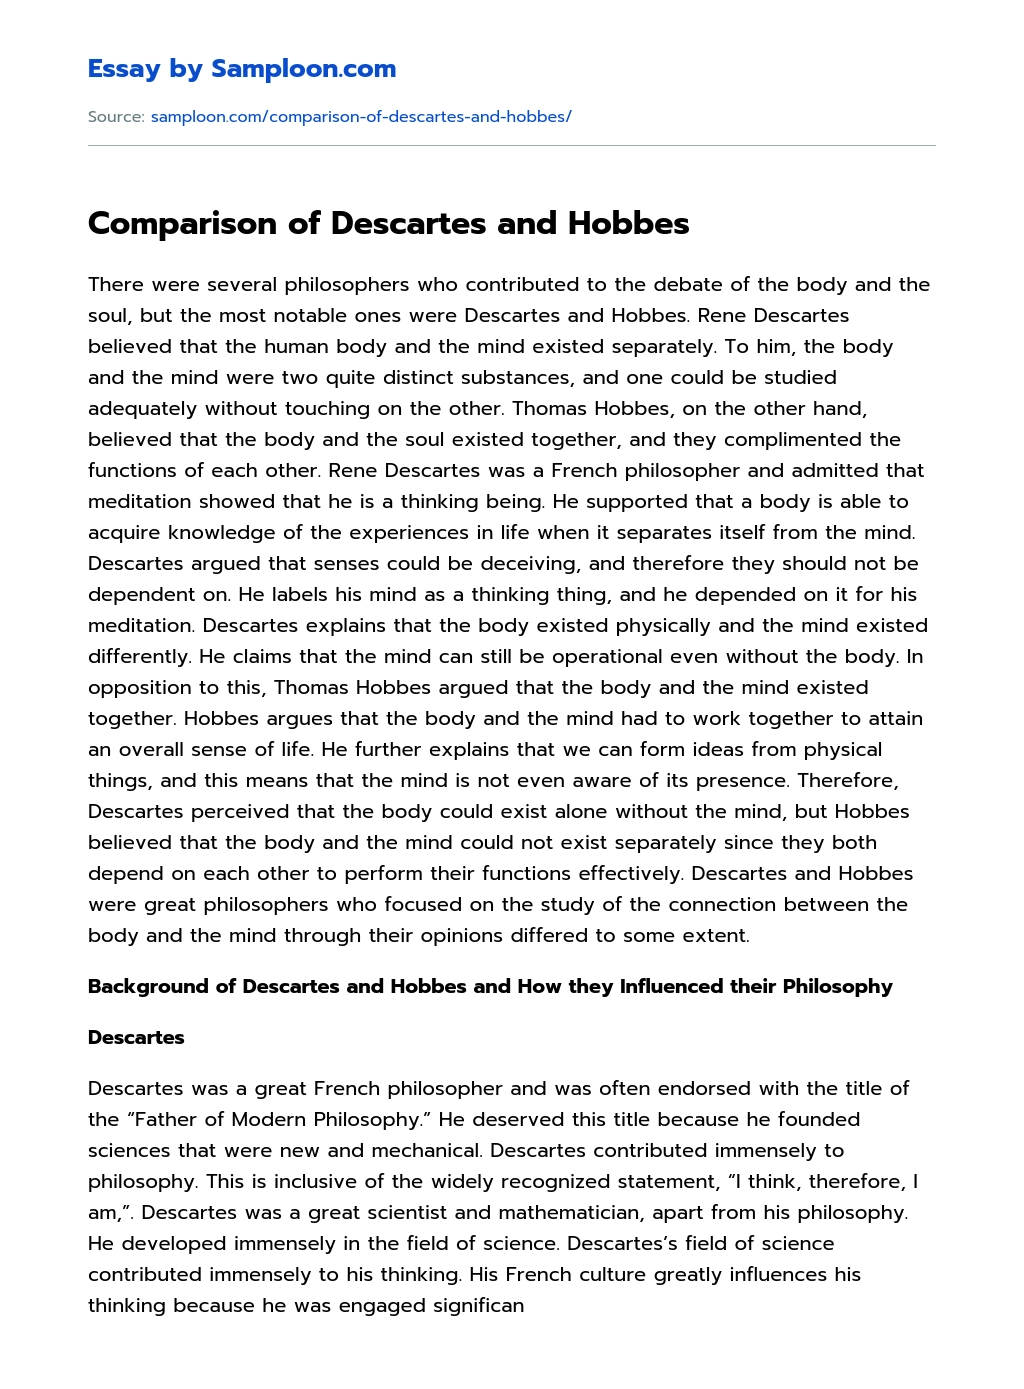 Comparison of Descartes and Hobbes essay